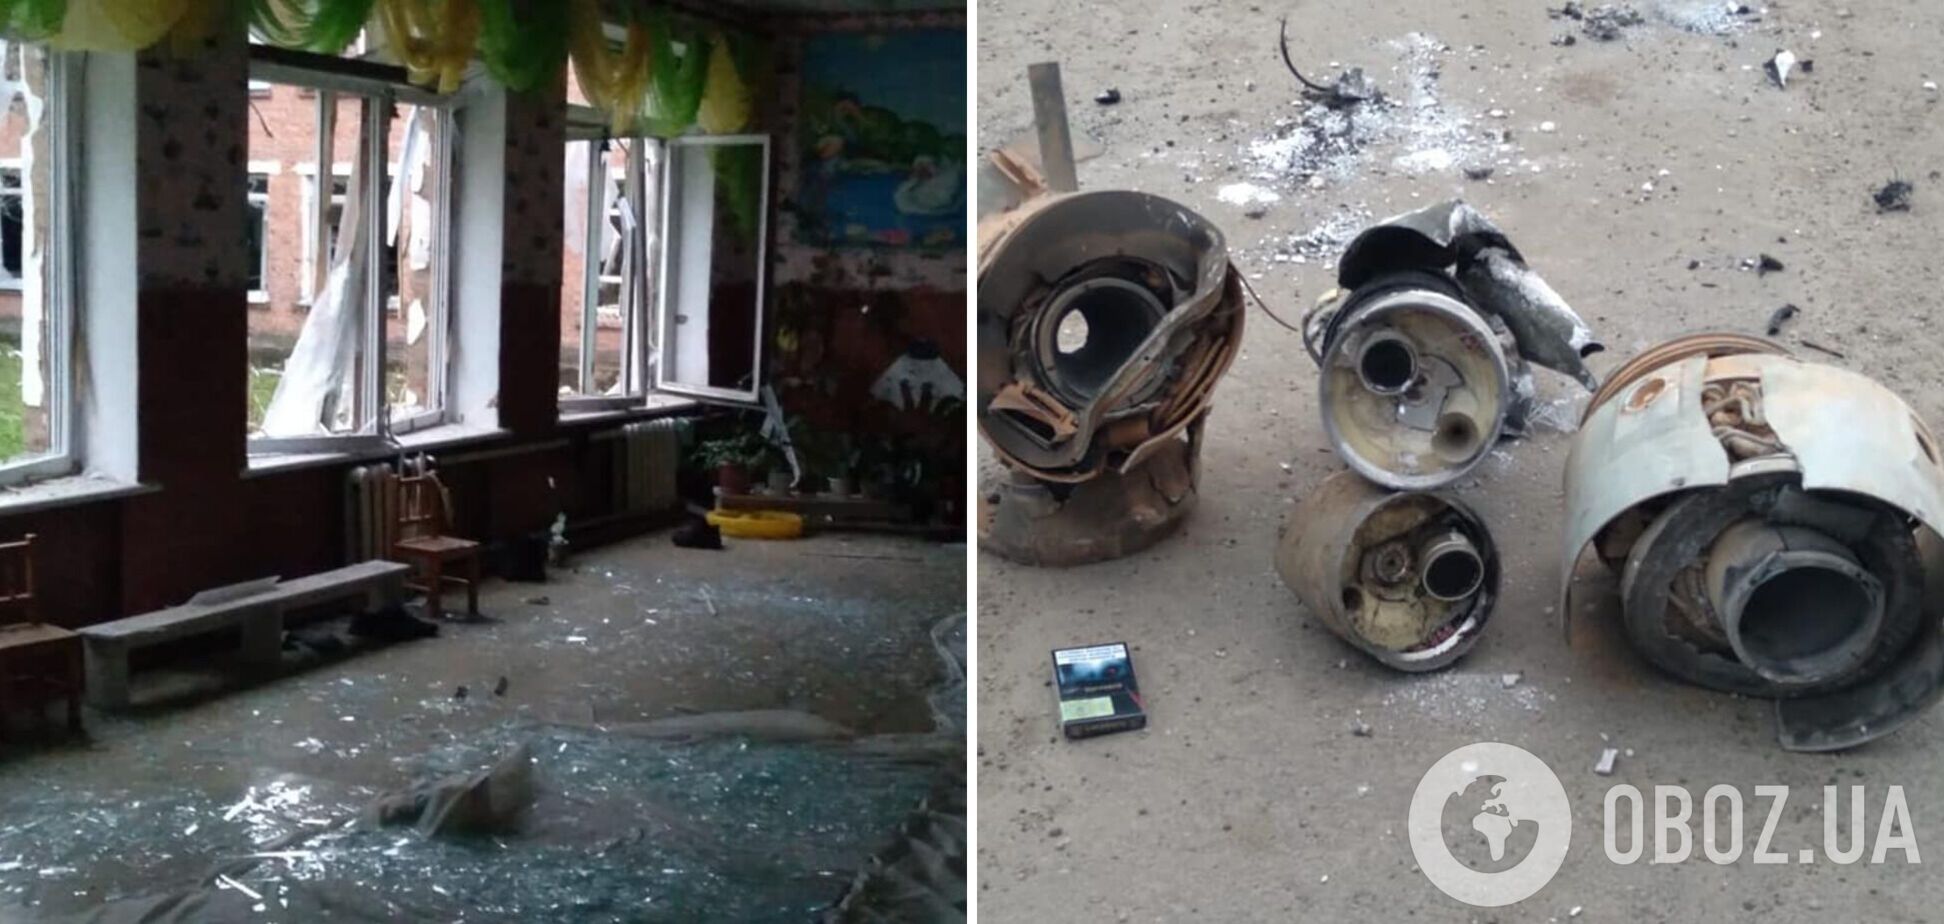 Оккупанты обстреляли школу и объекты инфраструктуры на Сумщине. Фото